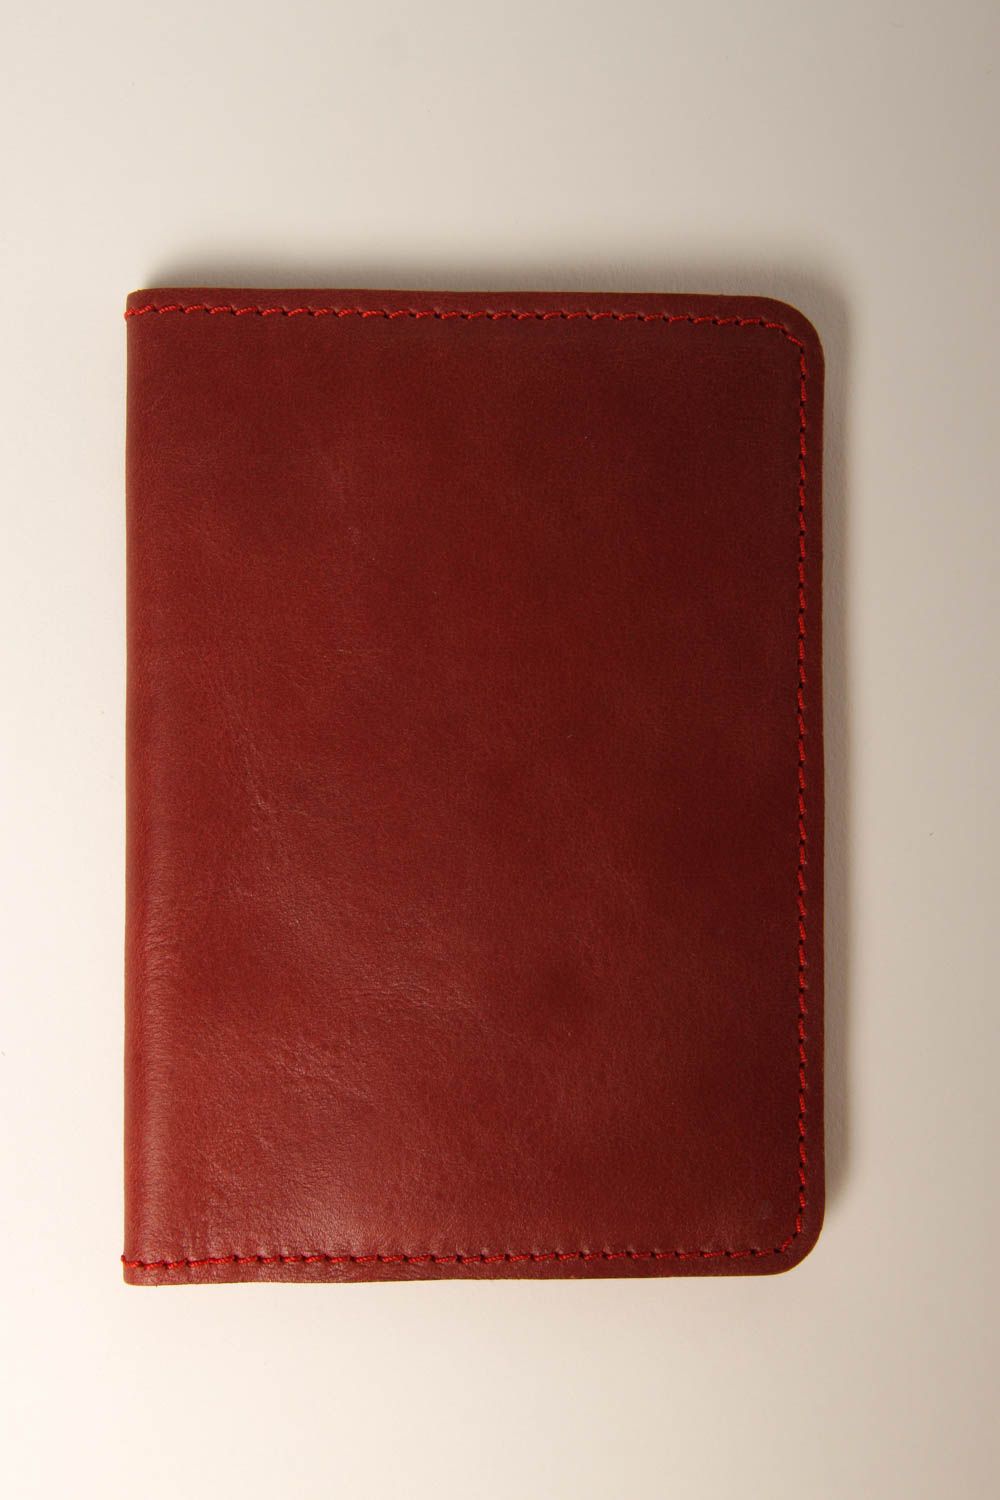 Red handmade leather wallet elegant wallet designer accessories for girls photo 2